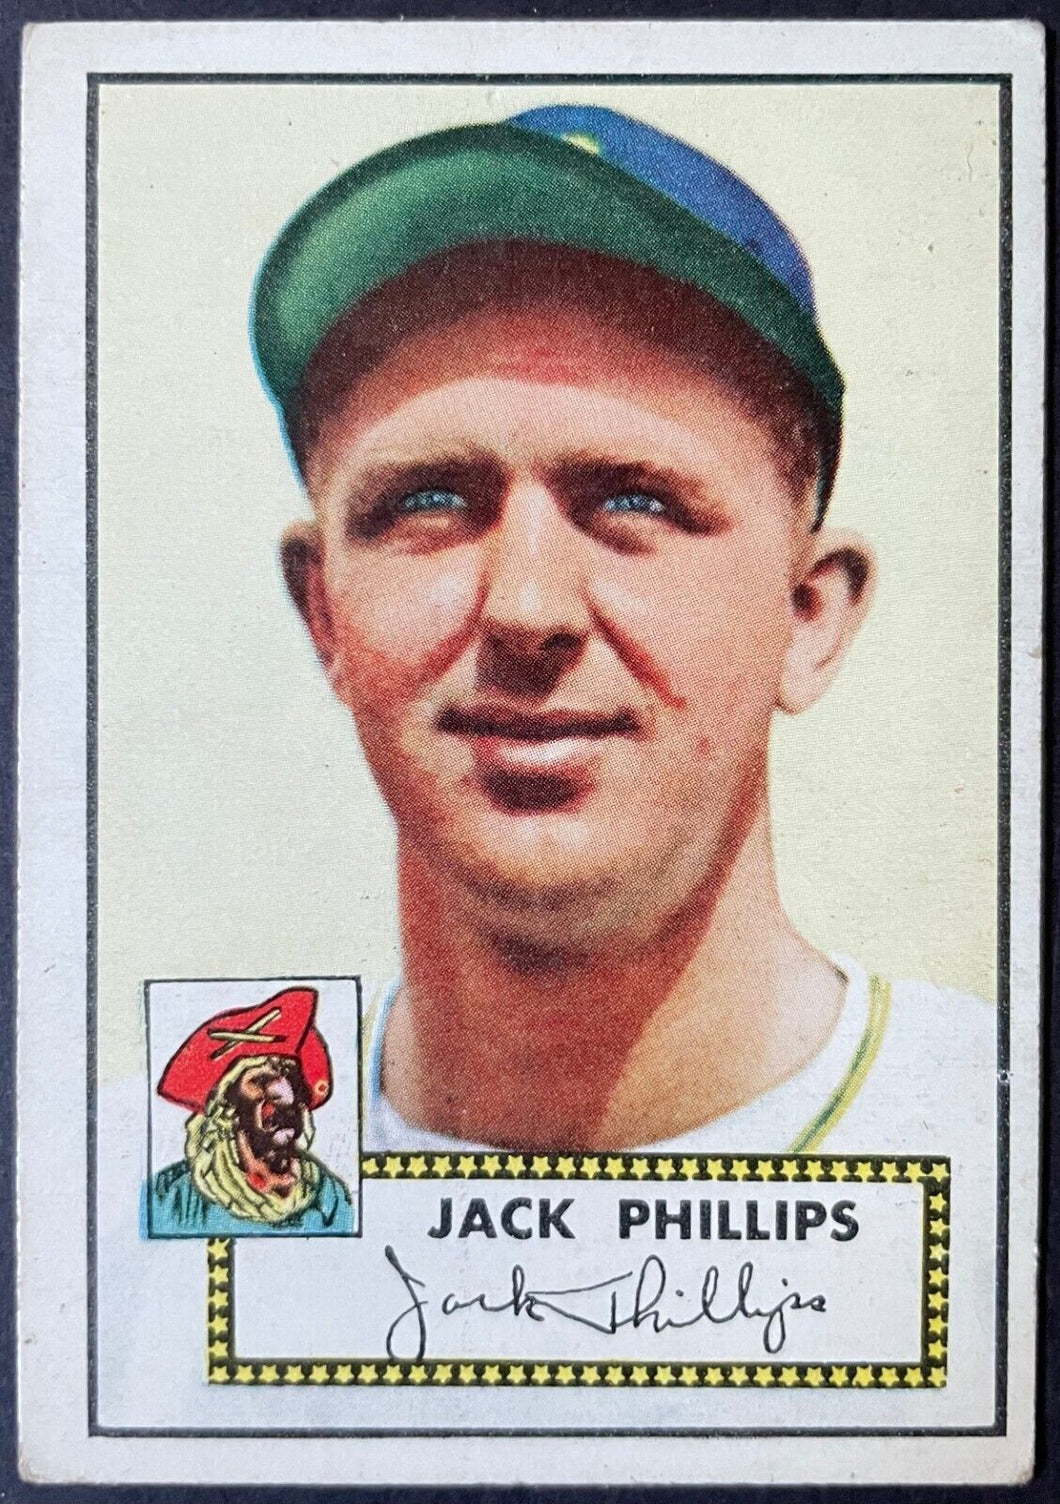 1952 Topps Baseball Jack Phillips #240 Pittsburgh Pirates MLB Card Vintage